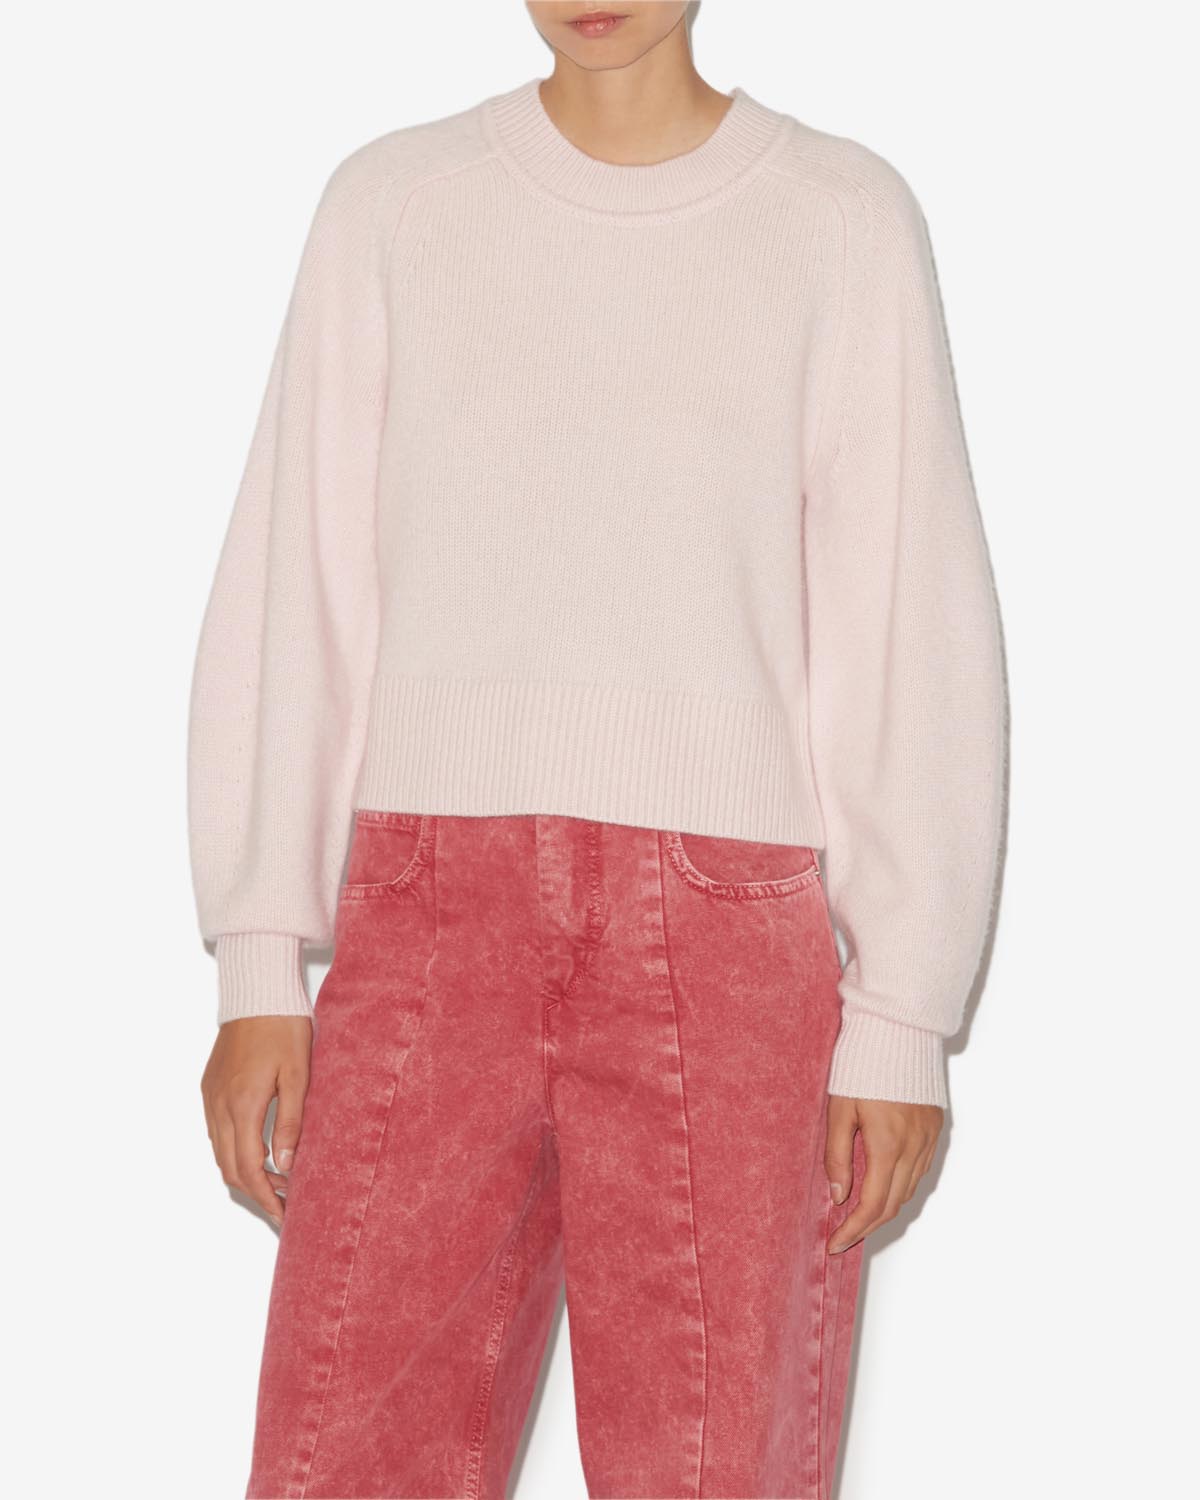 Leandra sweater Woman Light pink 4